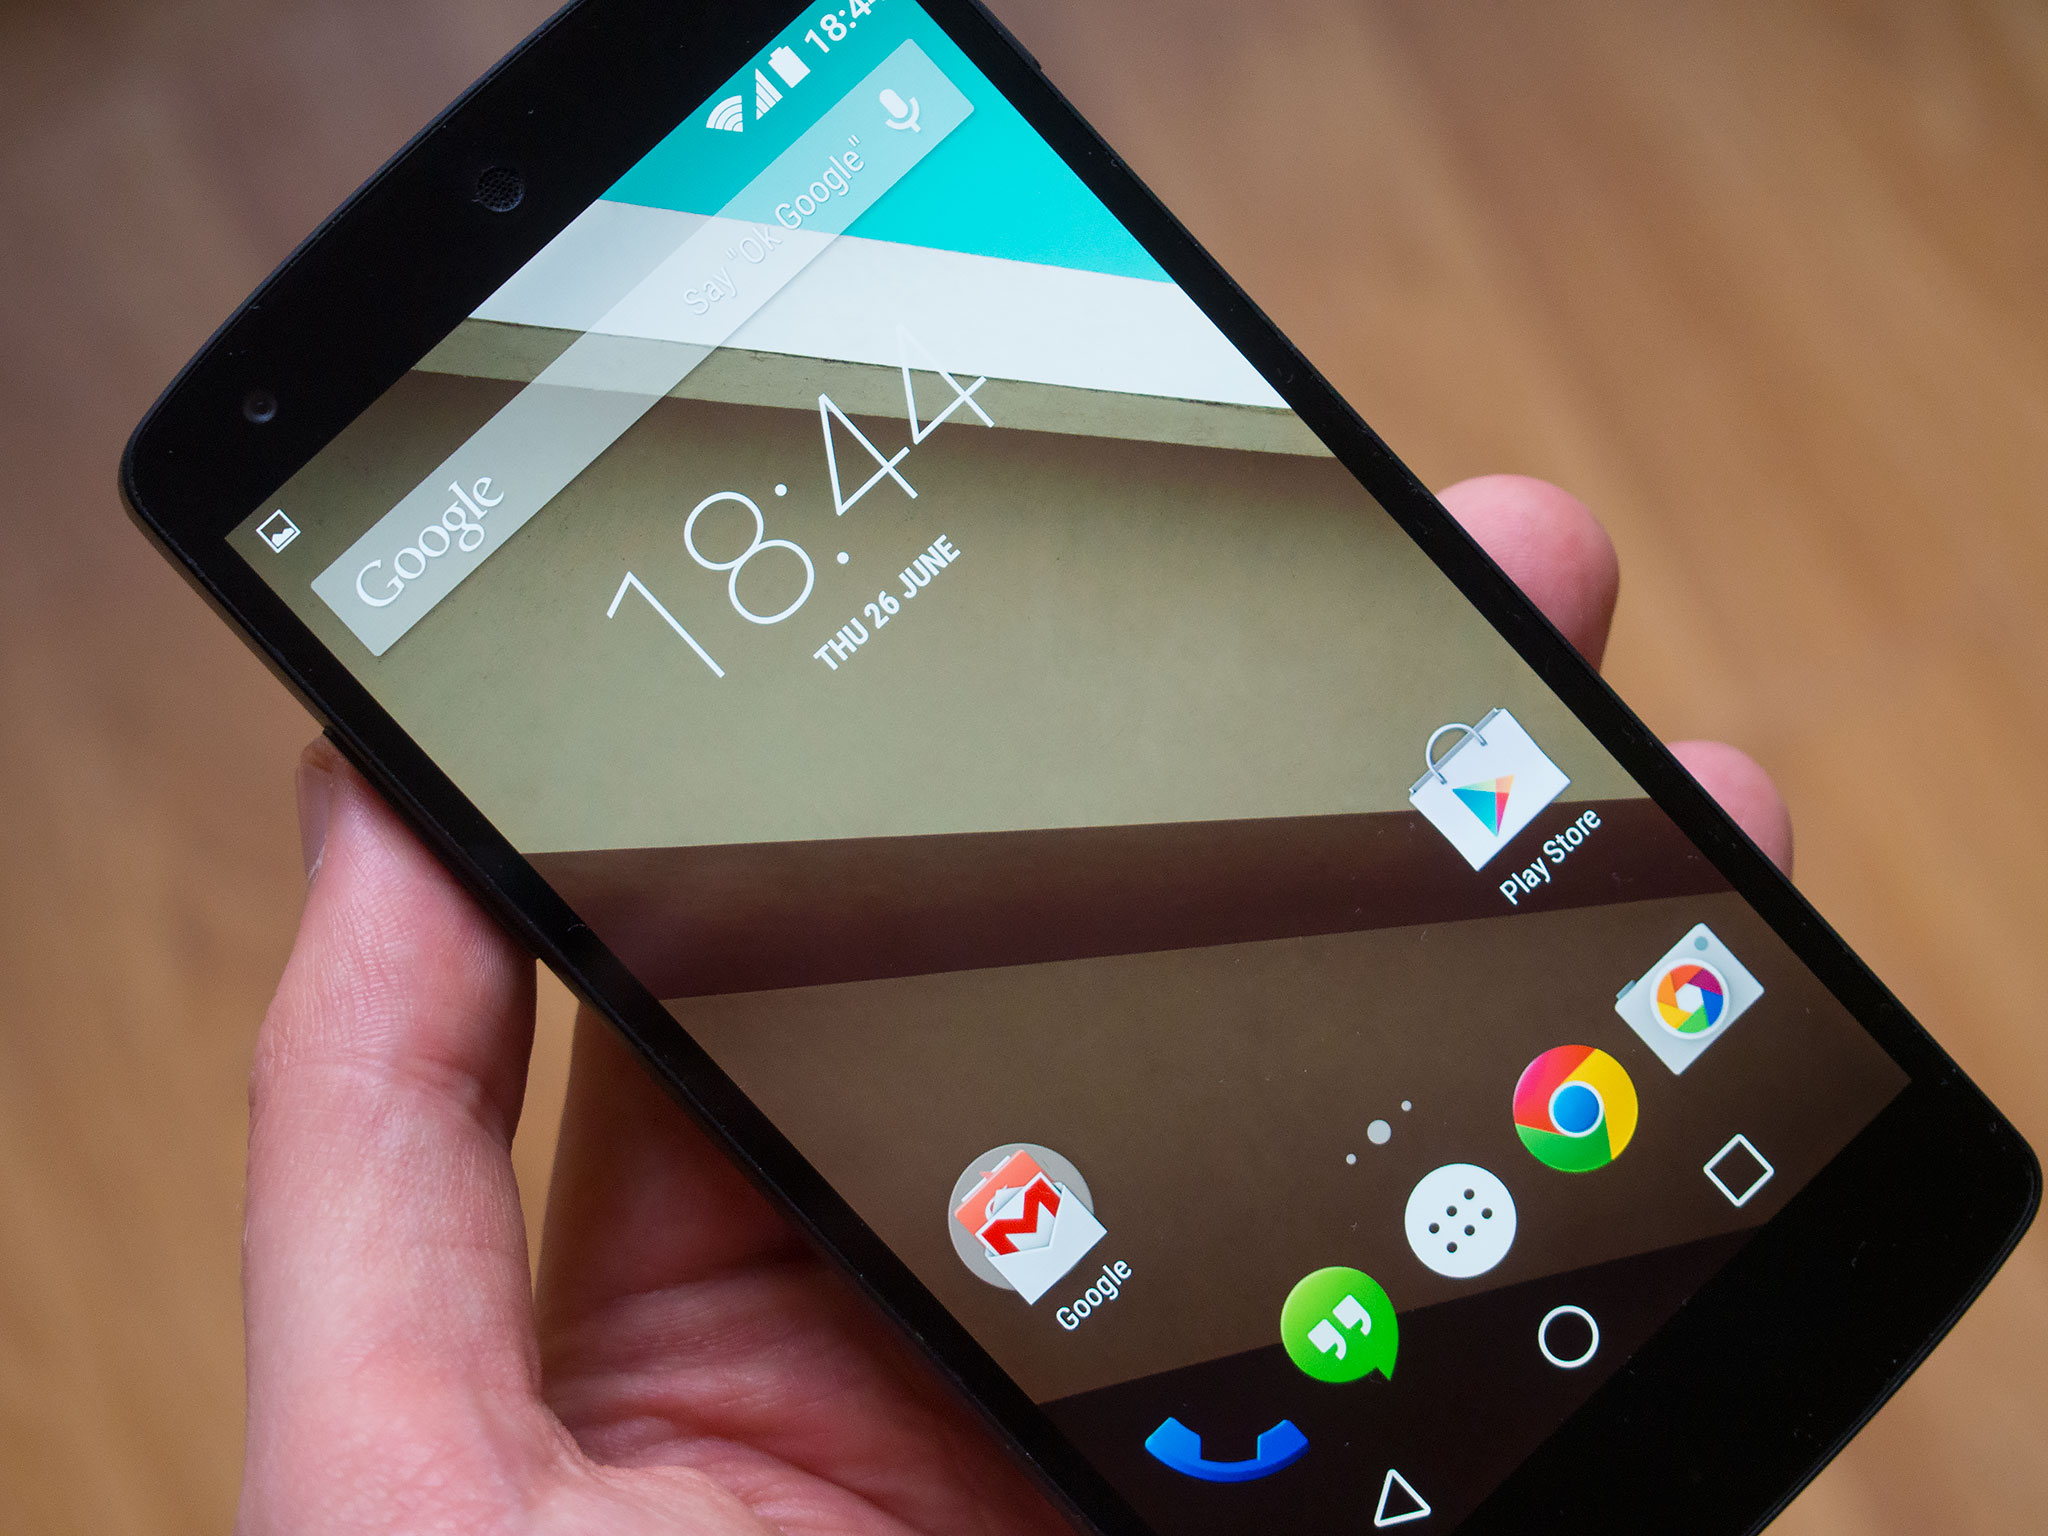 Nexus 5 on Android L